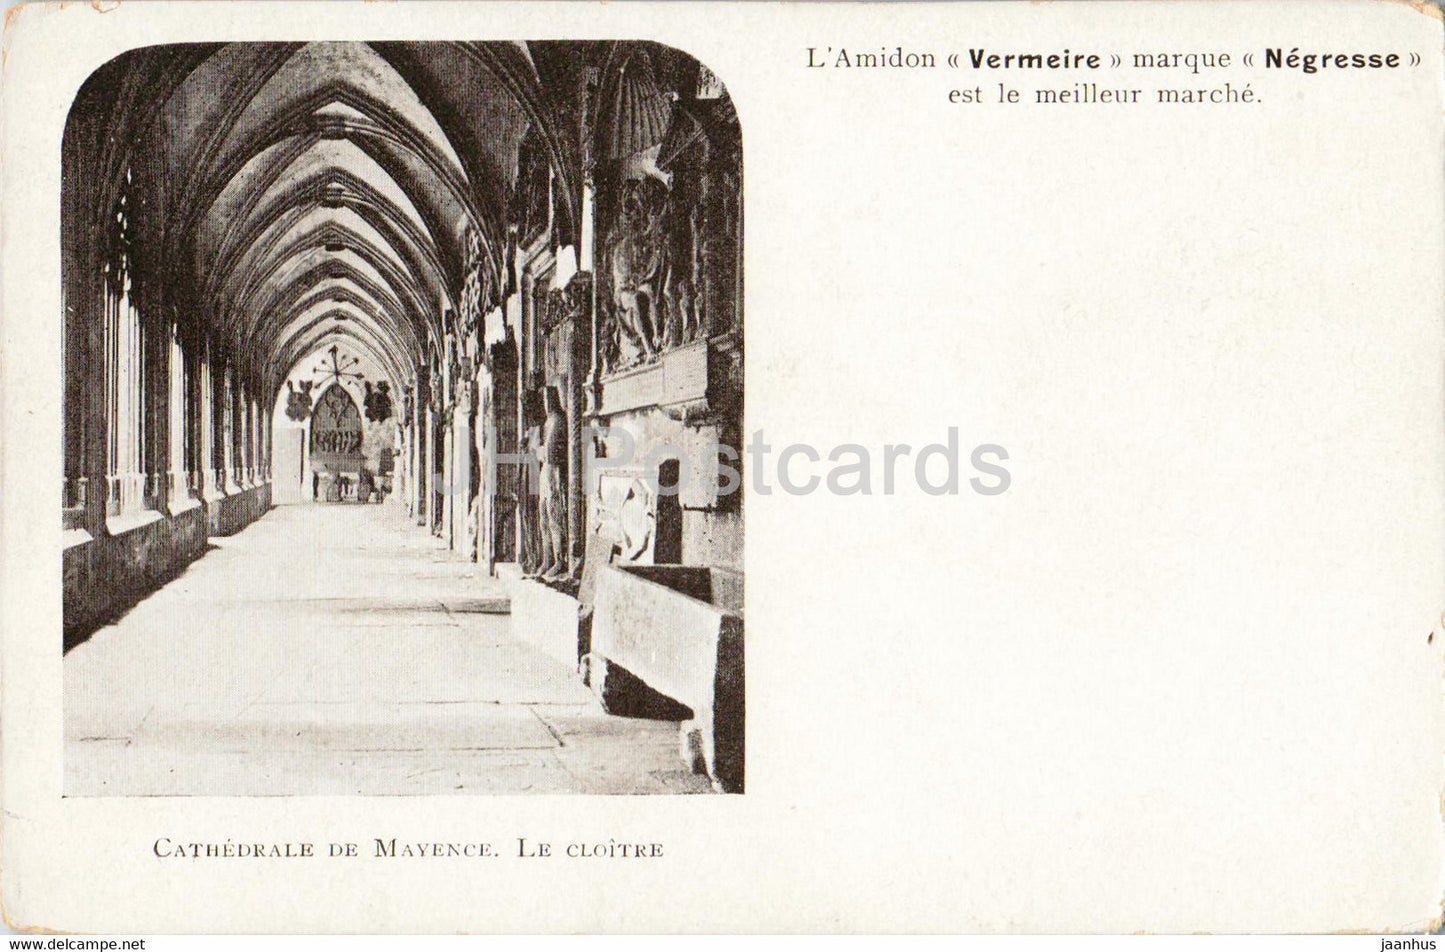 Cathedrale de Mayence - Mainz - Le Cloitre - Amidon Vermeire - old postcard - Germany - unused - JH Postcards